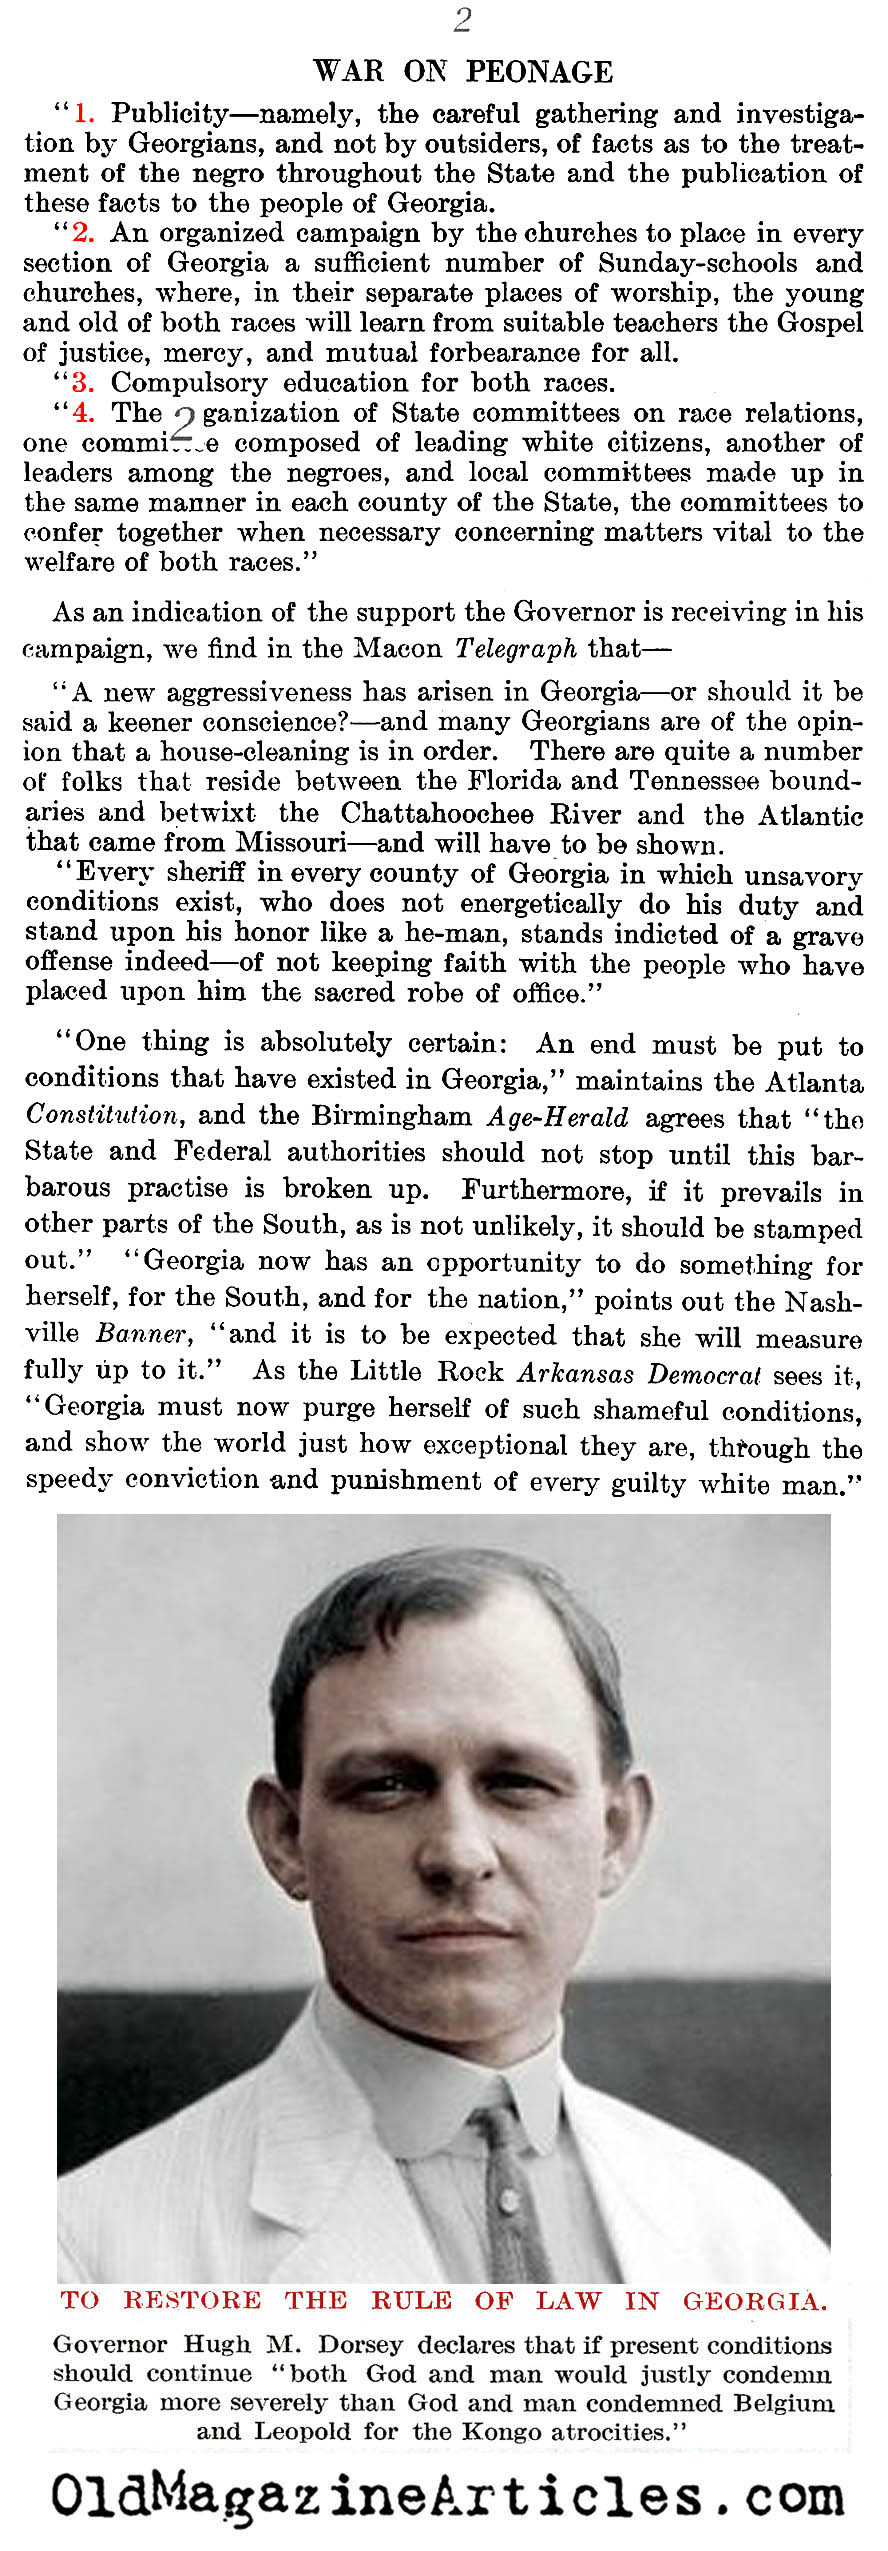 Restraining The Terror In Georgia (The Literary Digest, 1921)